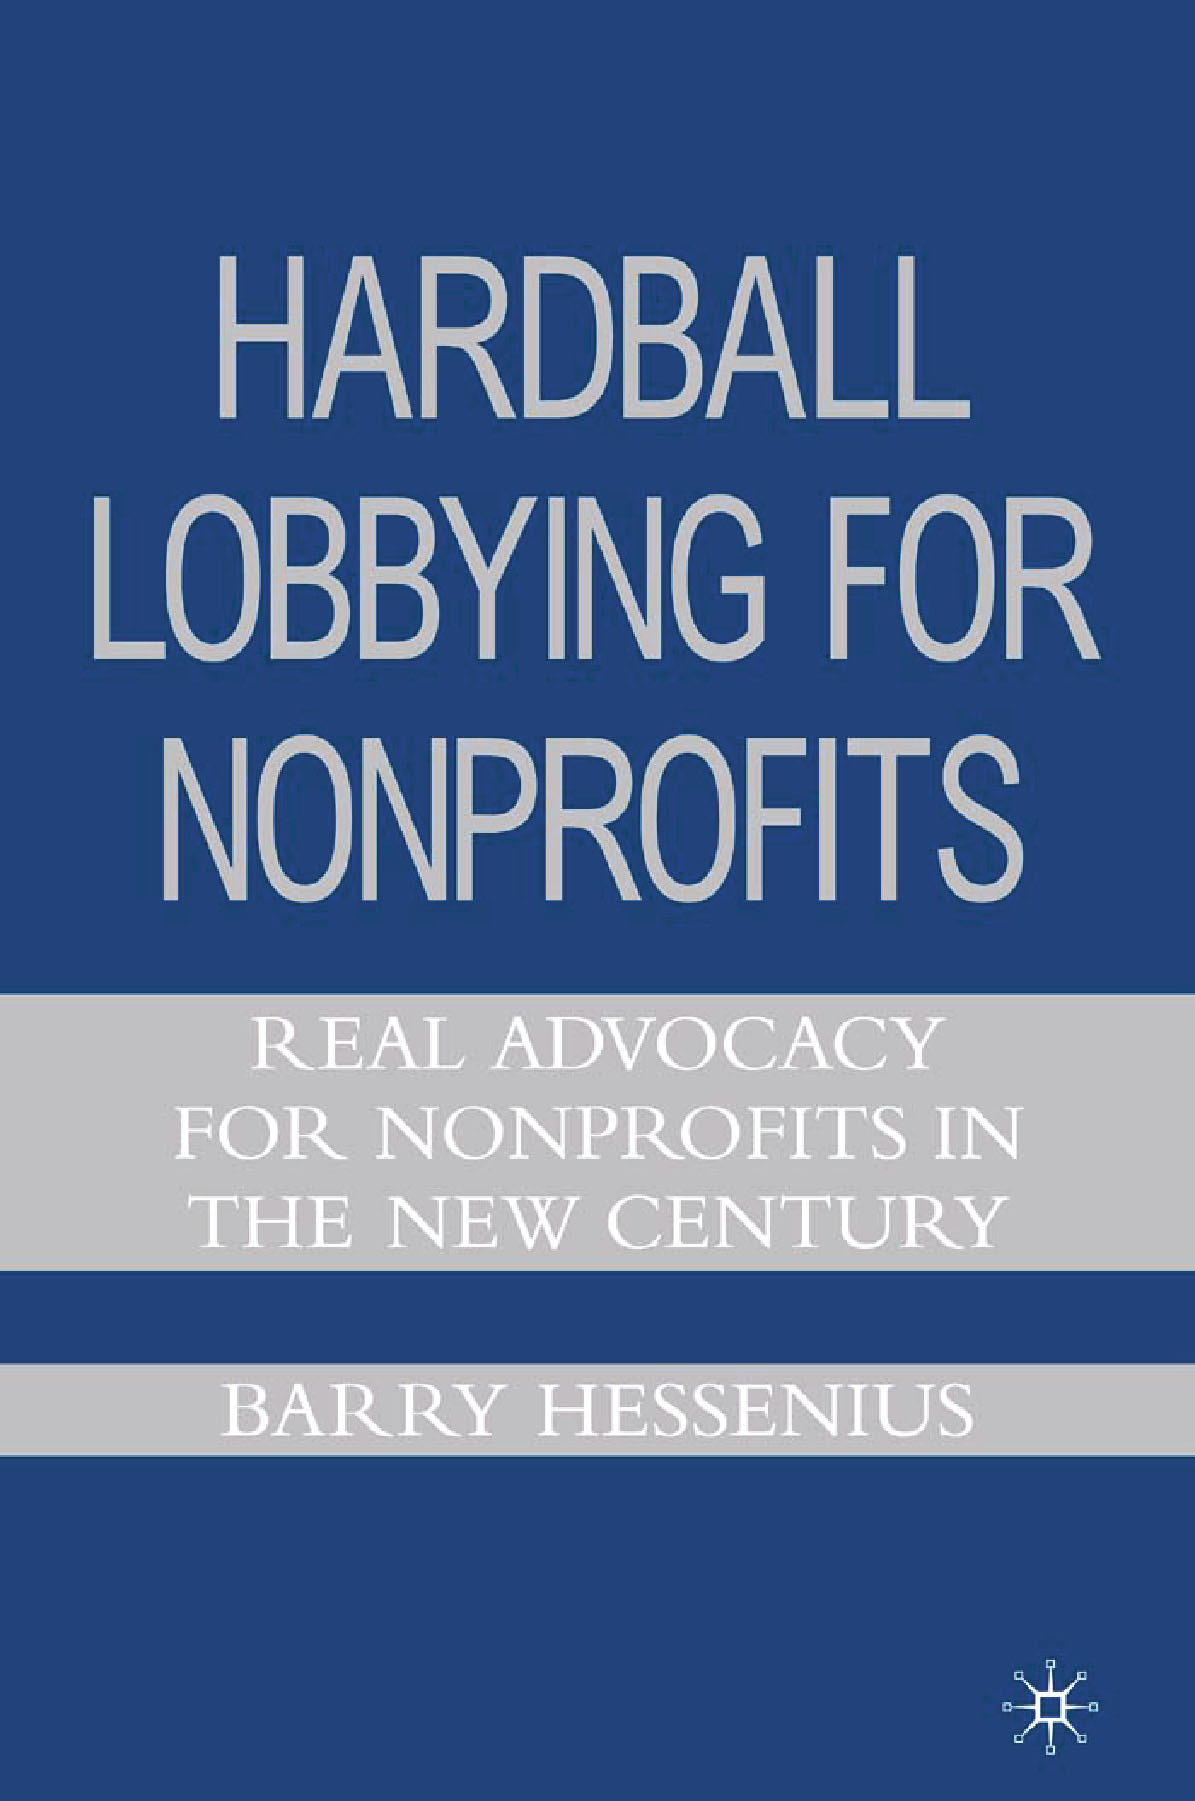 Hessenius, Barry - Hardball Lobbying for Nonprofits, ebook